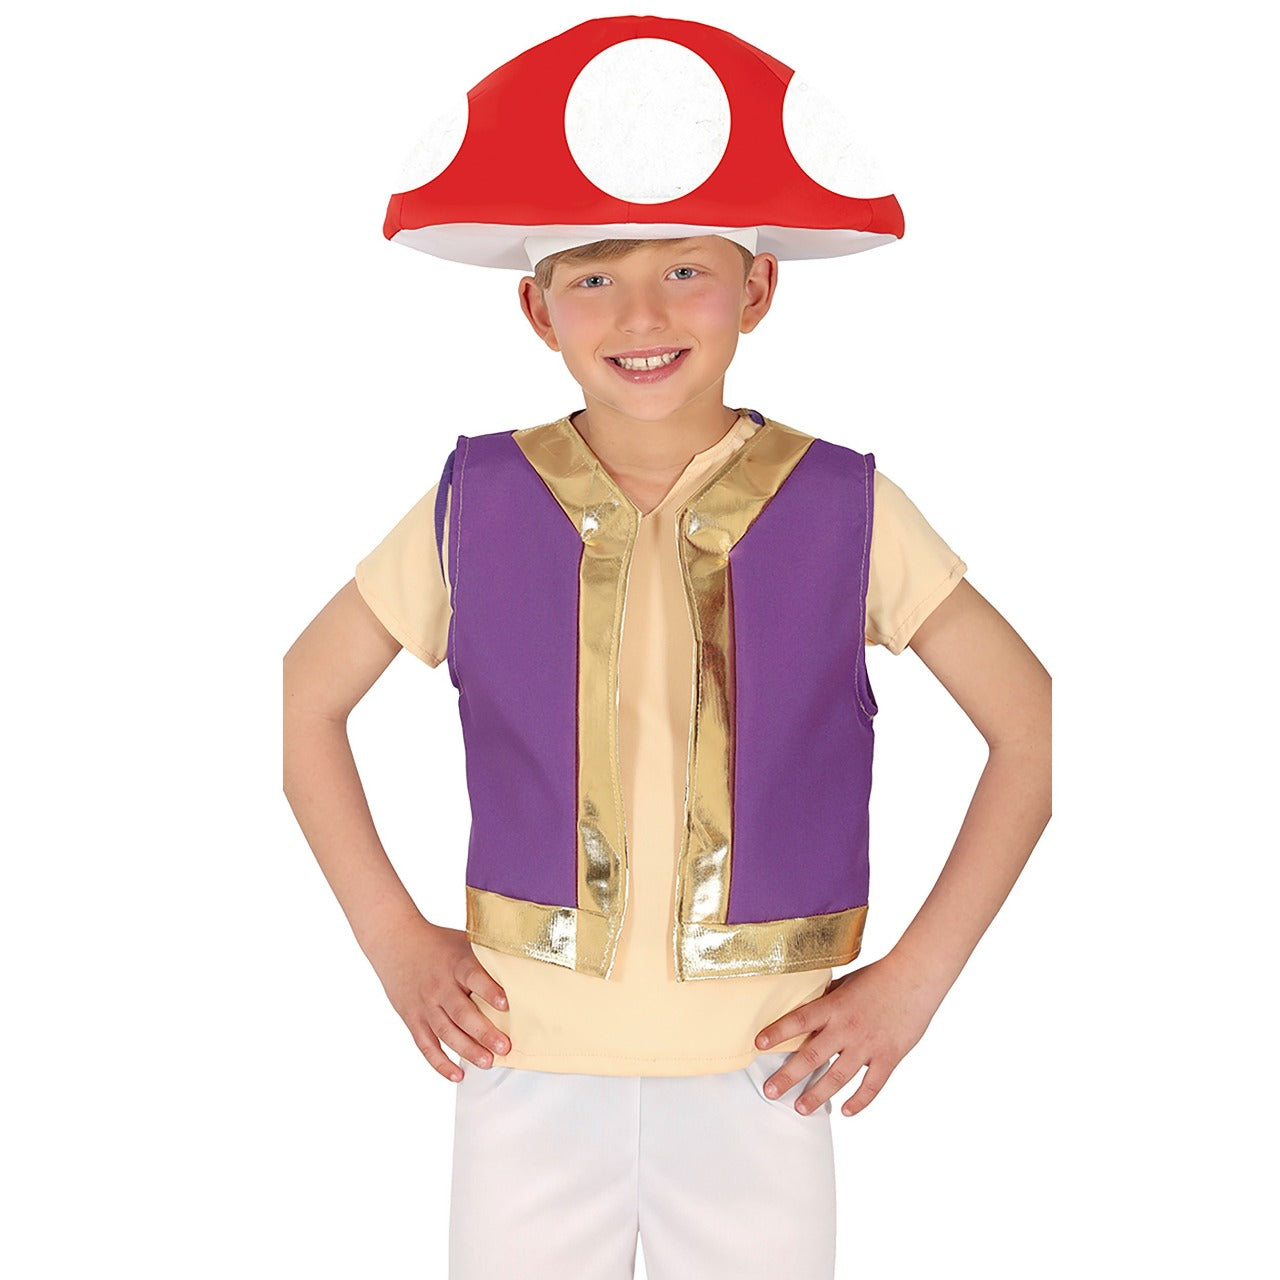 Acqusta online costume da funghetto Toad infantile